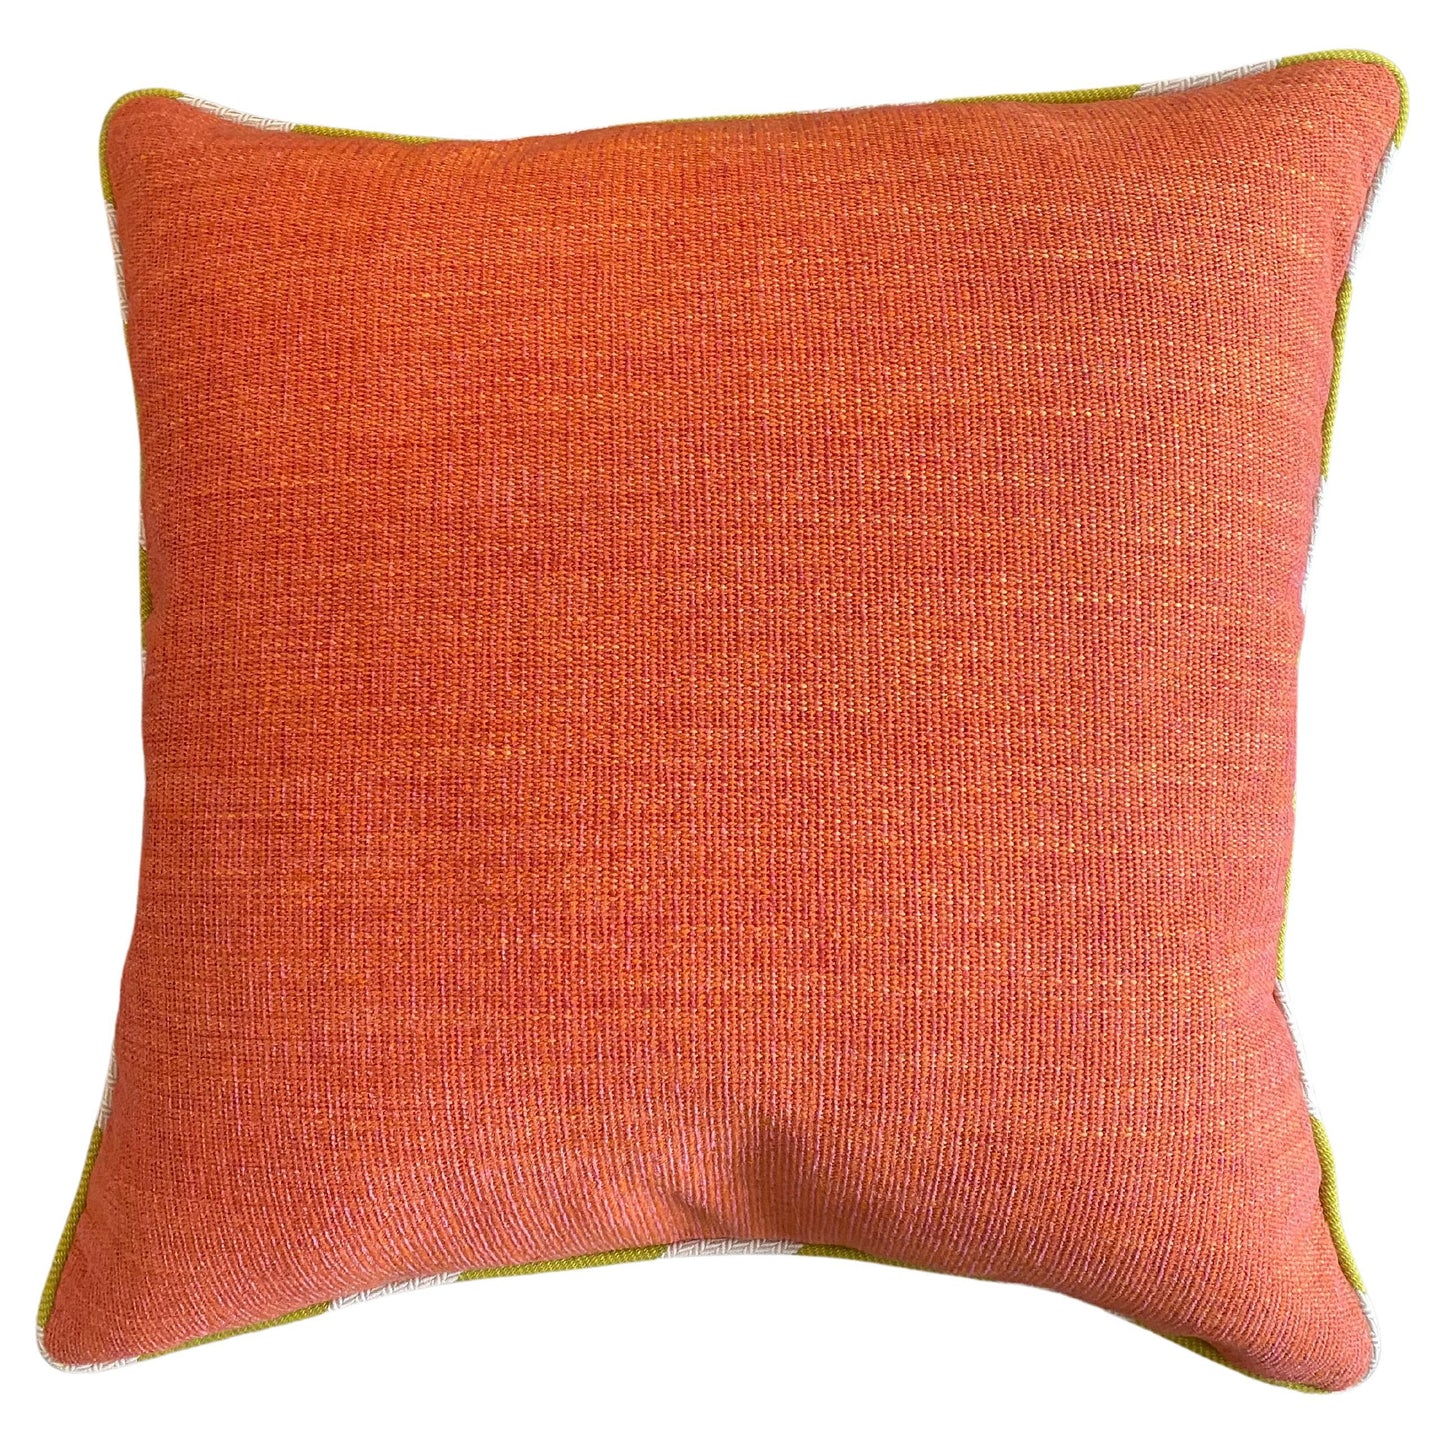 Orange / Tangerine Heavy Cotton Pillow with Celadon and White Welt